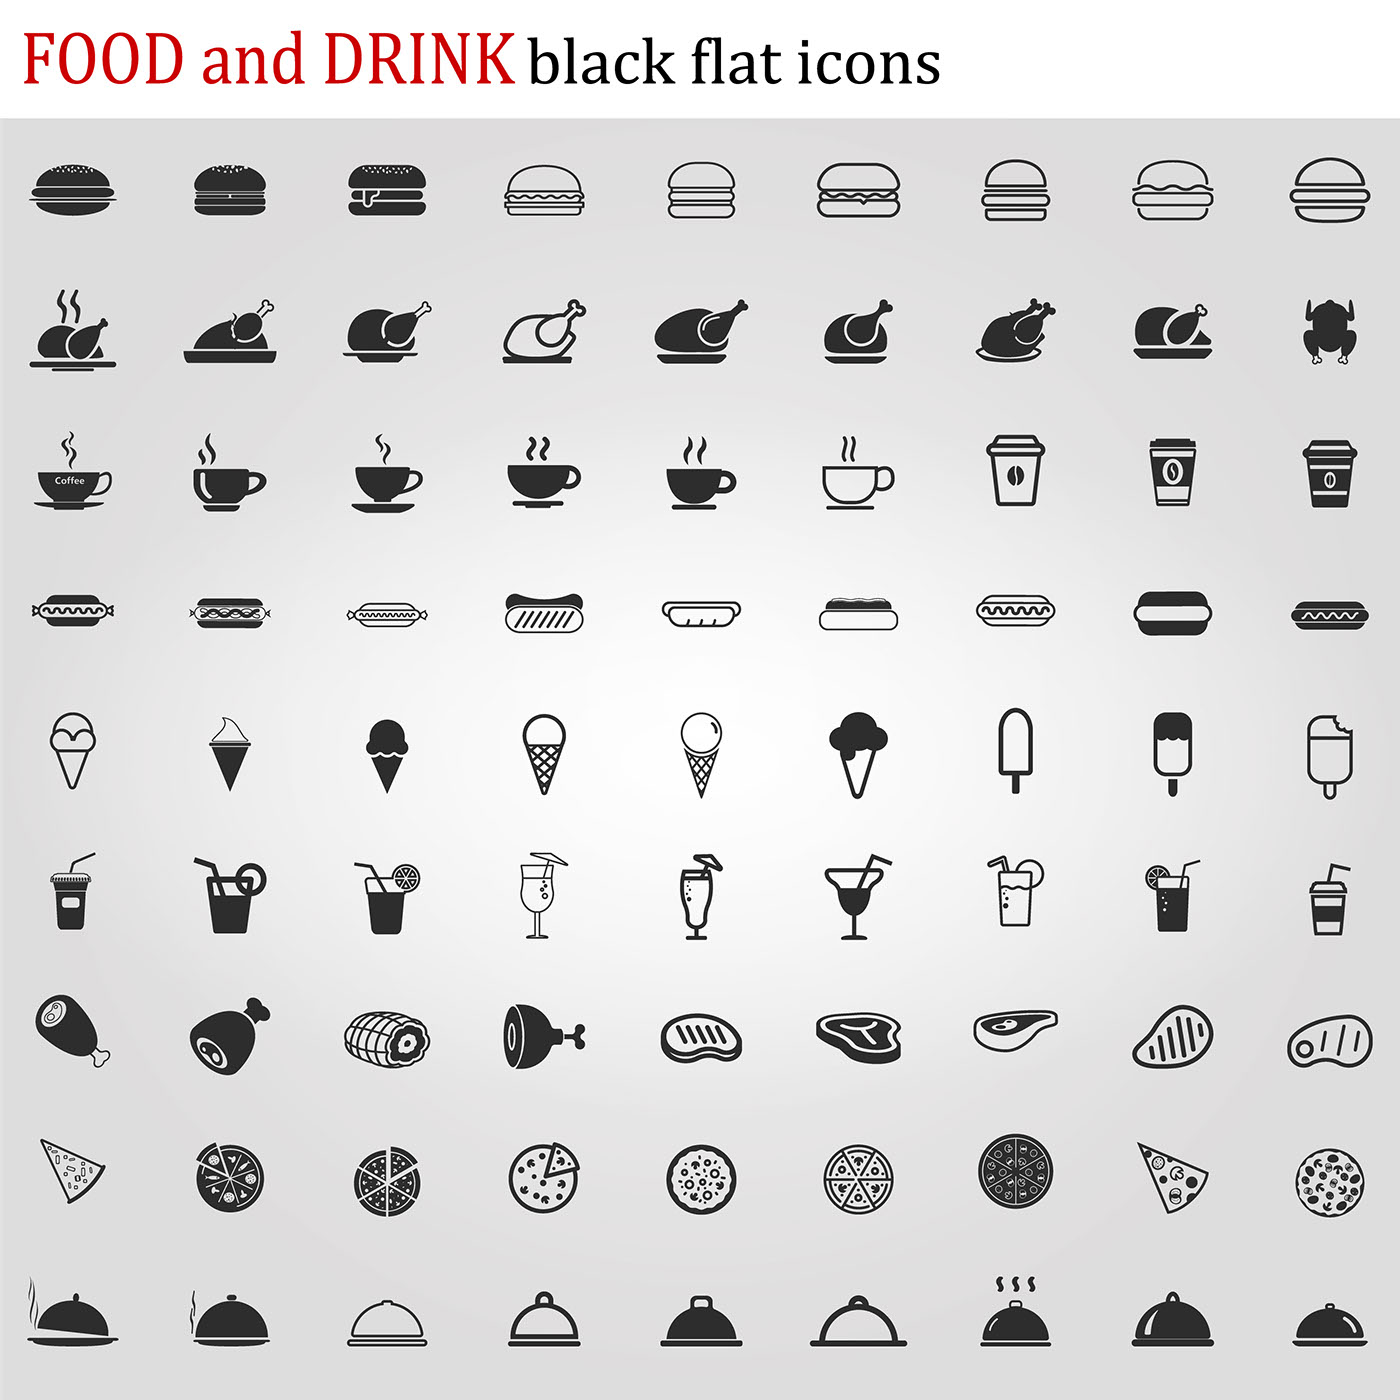 icons set universal flat icons black icons universal black flat Universal icons icon set icons set